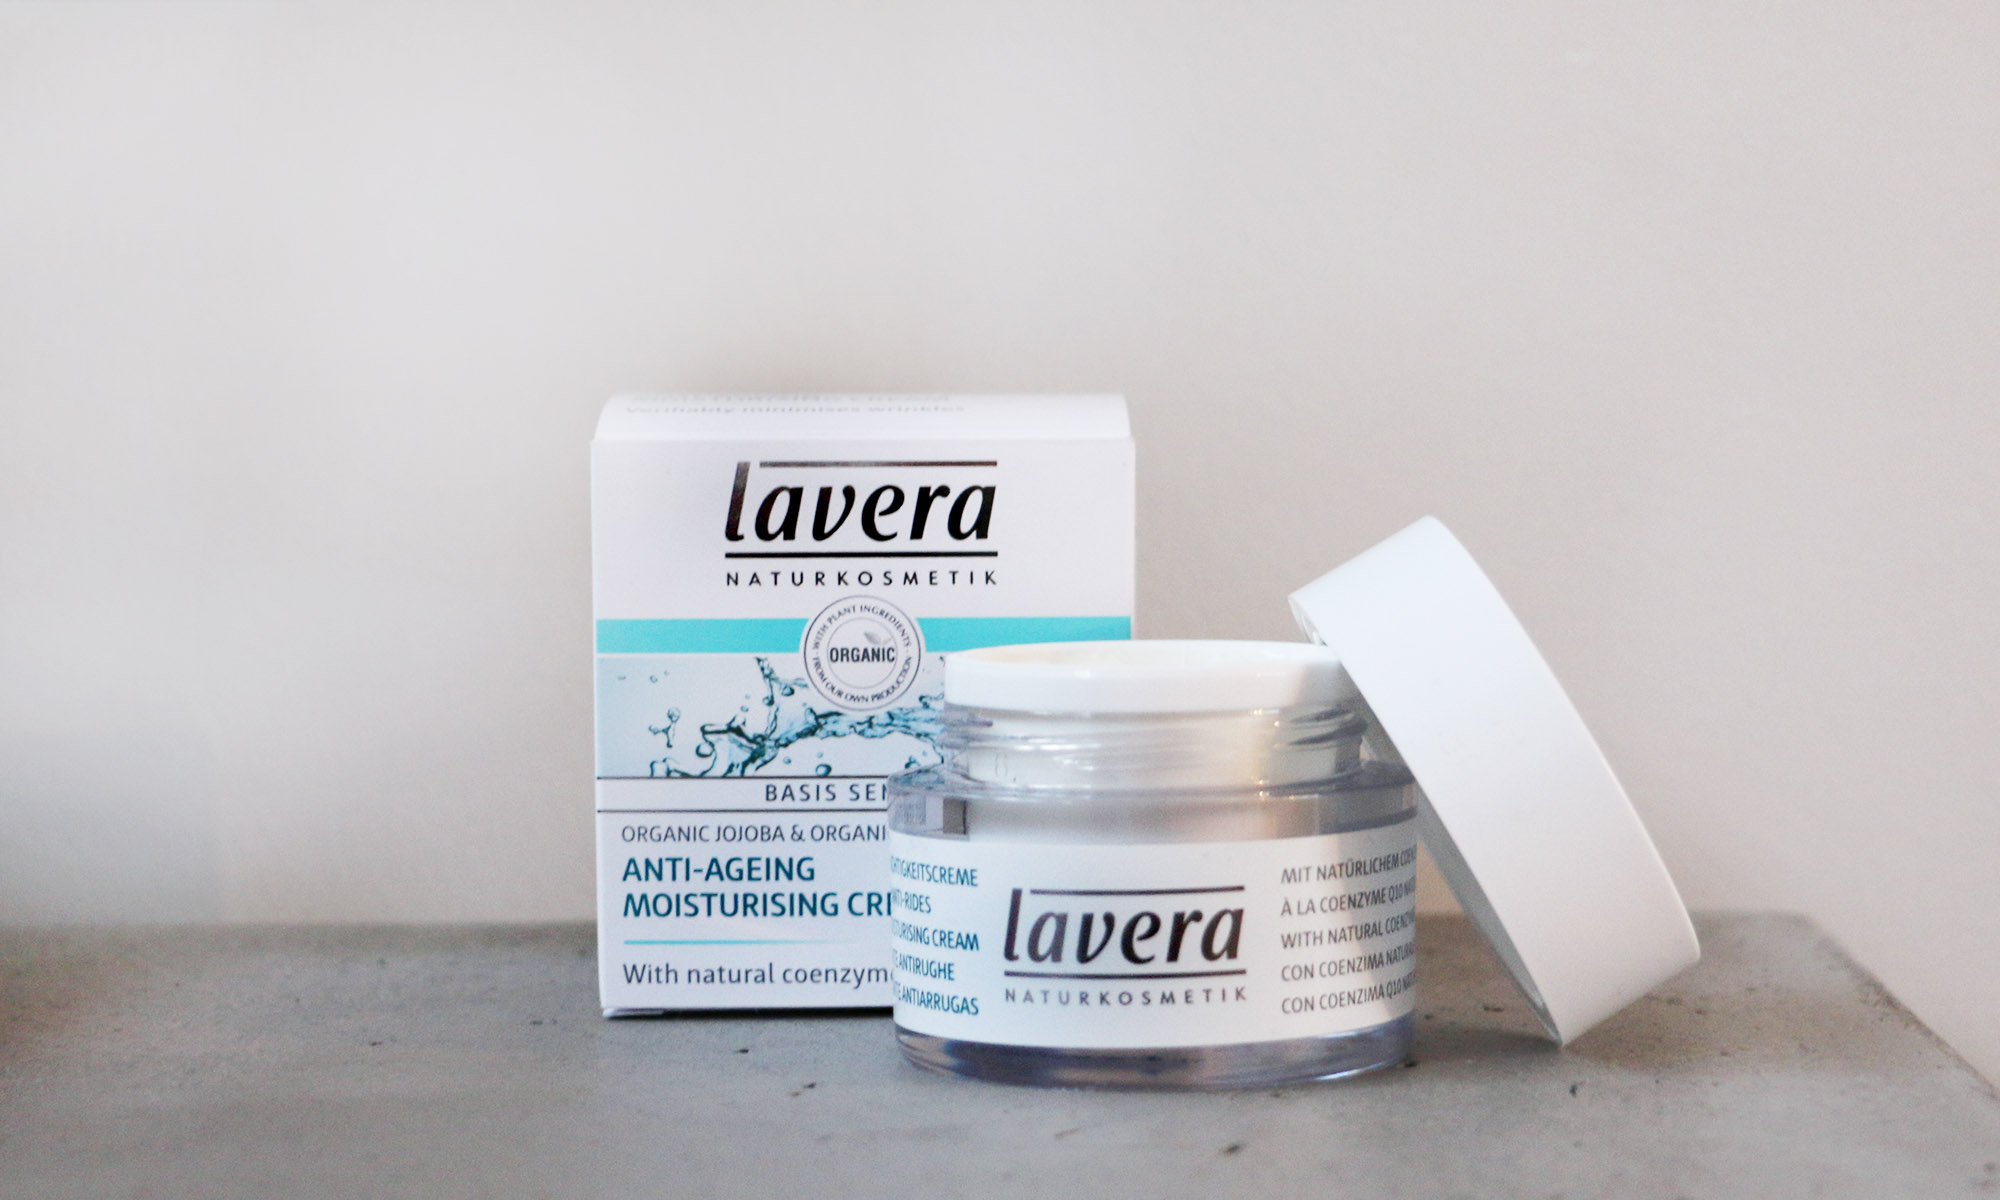 Lavera anti-ageing moisturizing cream